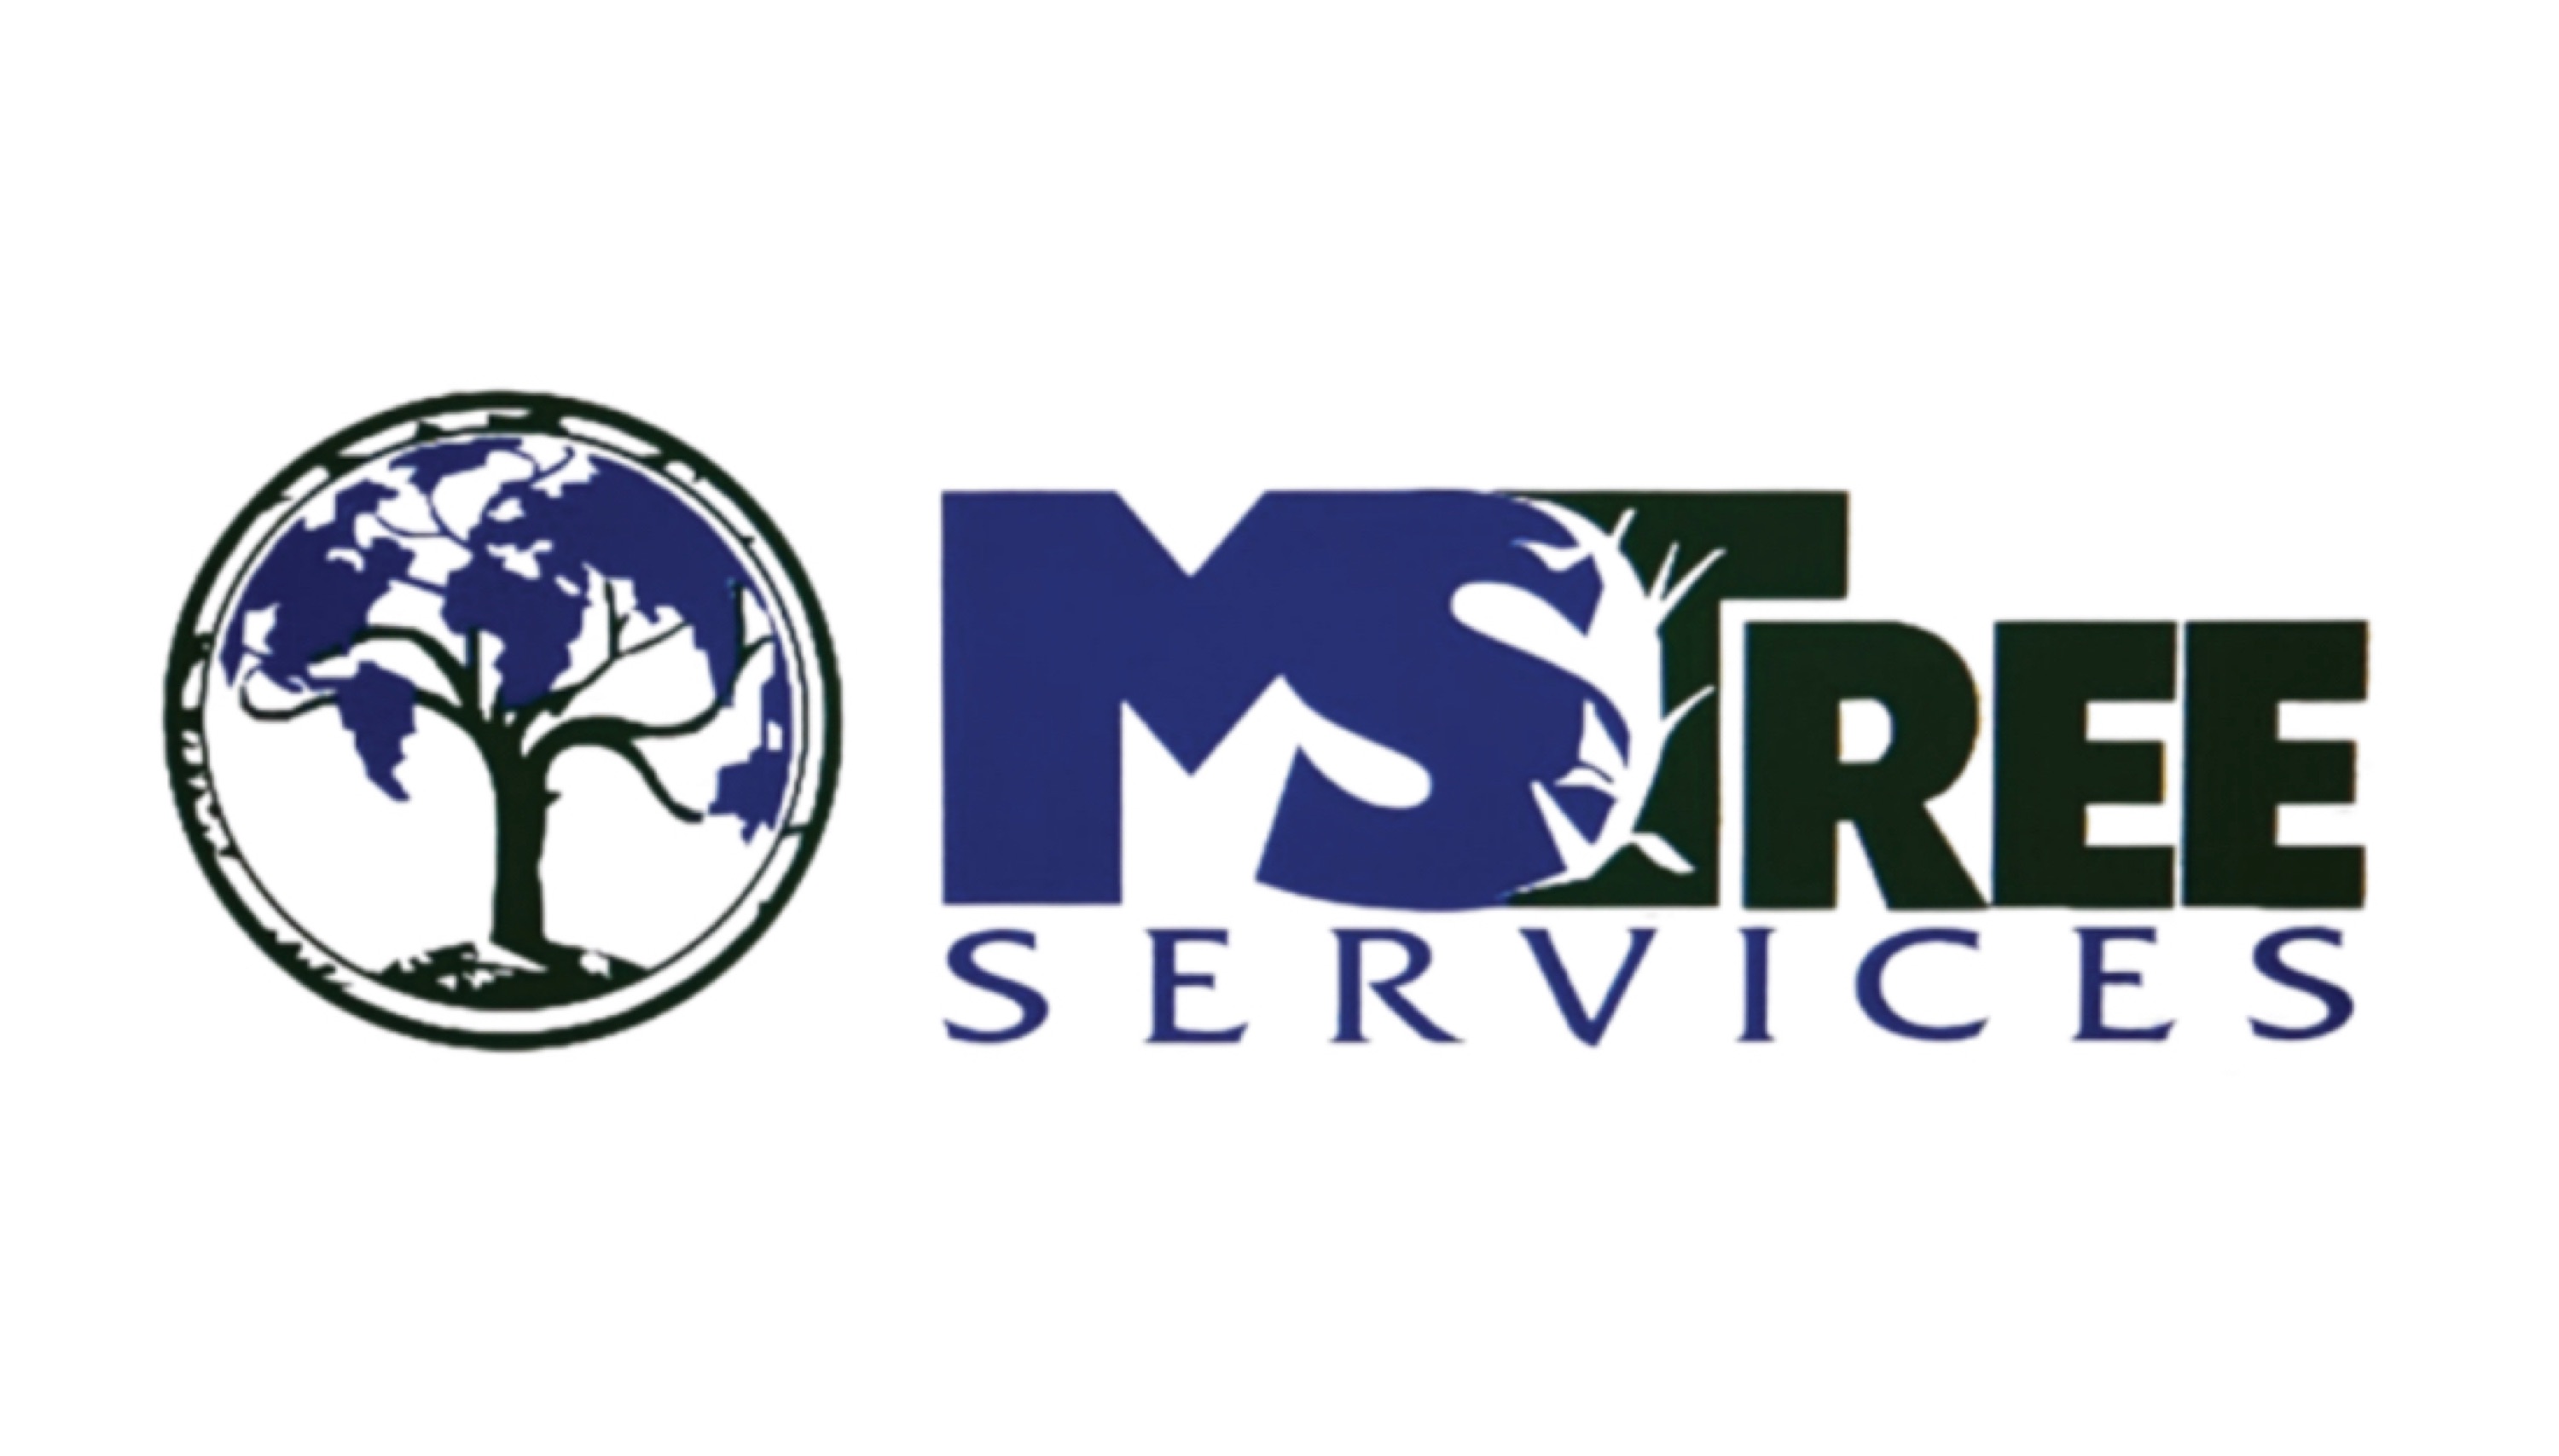 MS Tree Services Logo